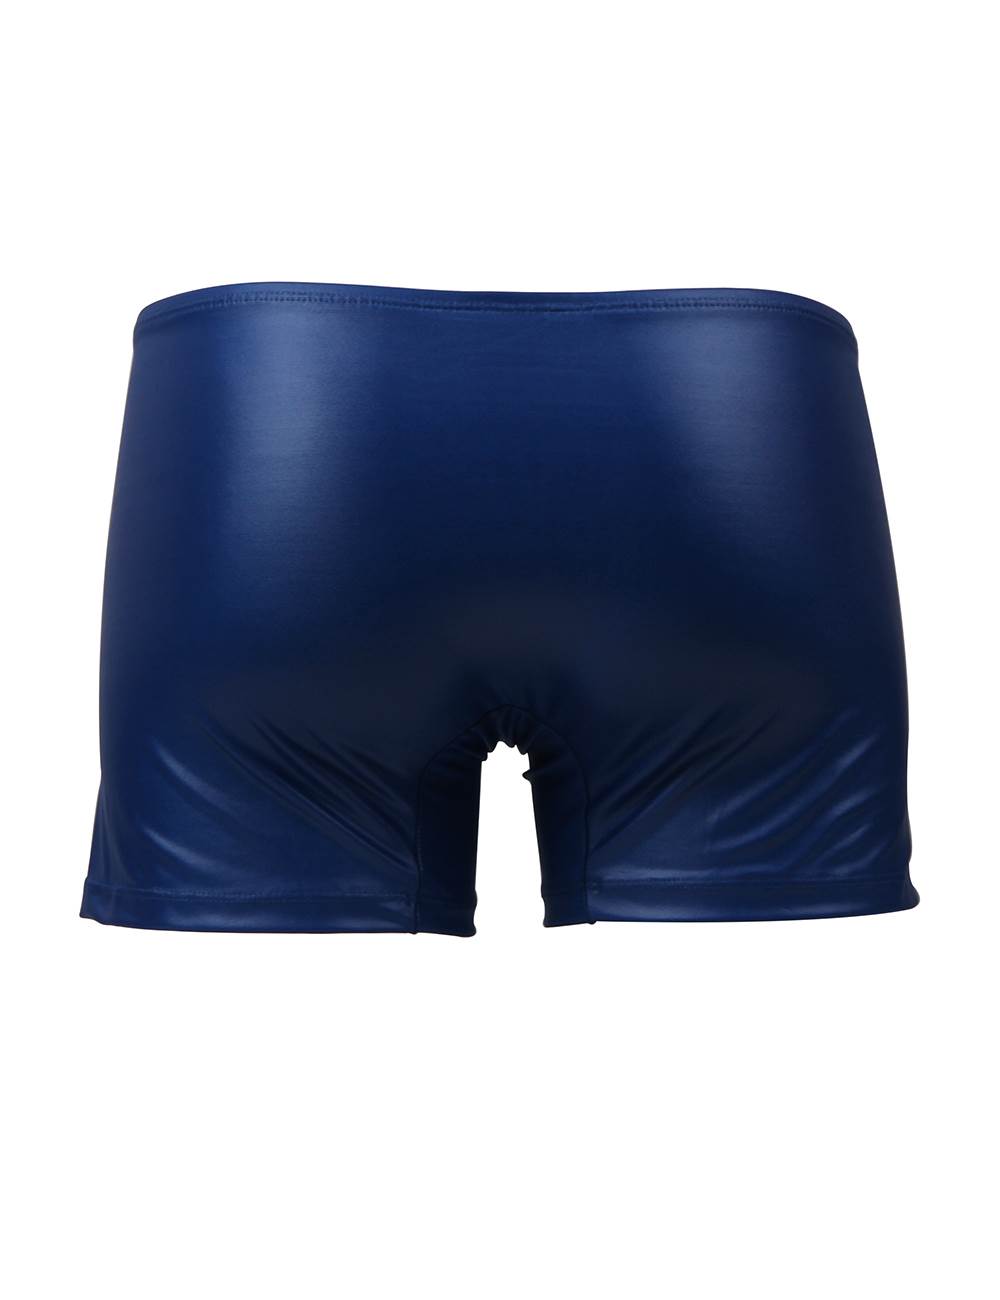 JCSTK -  Mens Wetlook Boxer Shorts with Zipper Pouch Front Blue